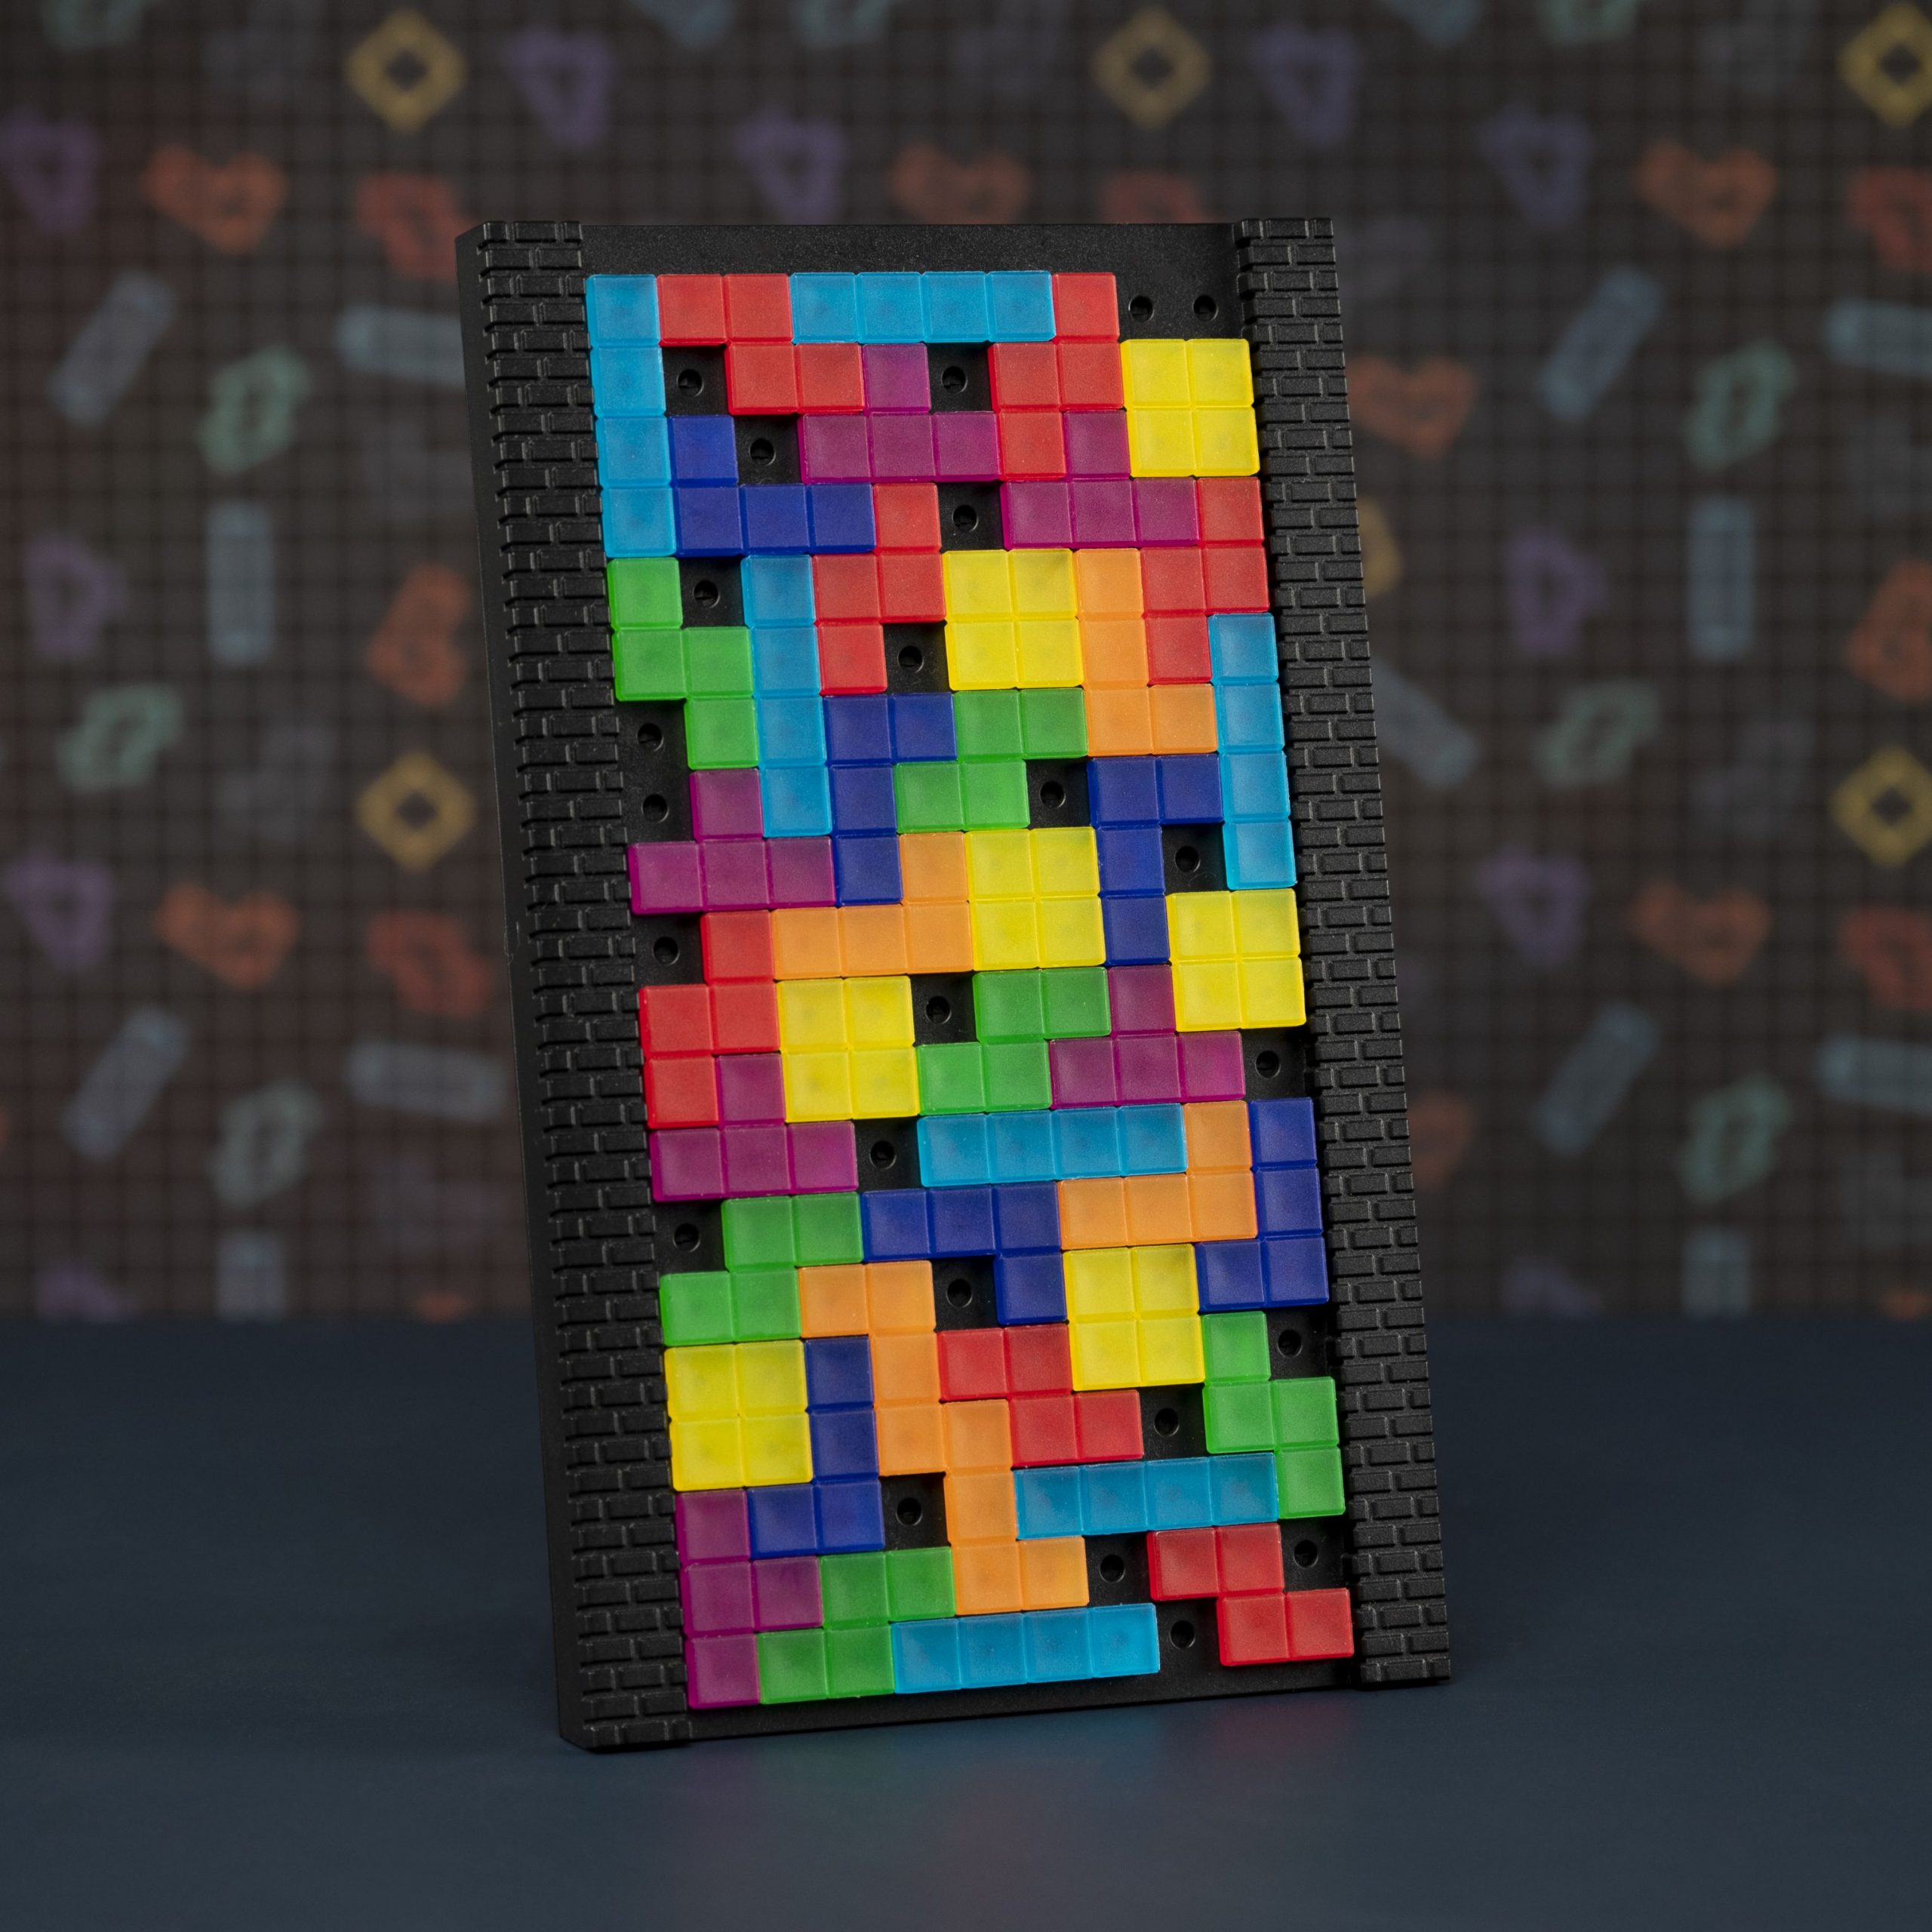 Paladone Tetris - Tetris Tetrimino Light PP5099TT - PALADONE